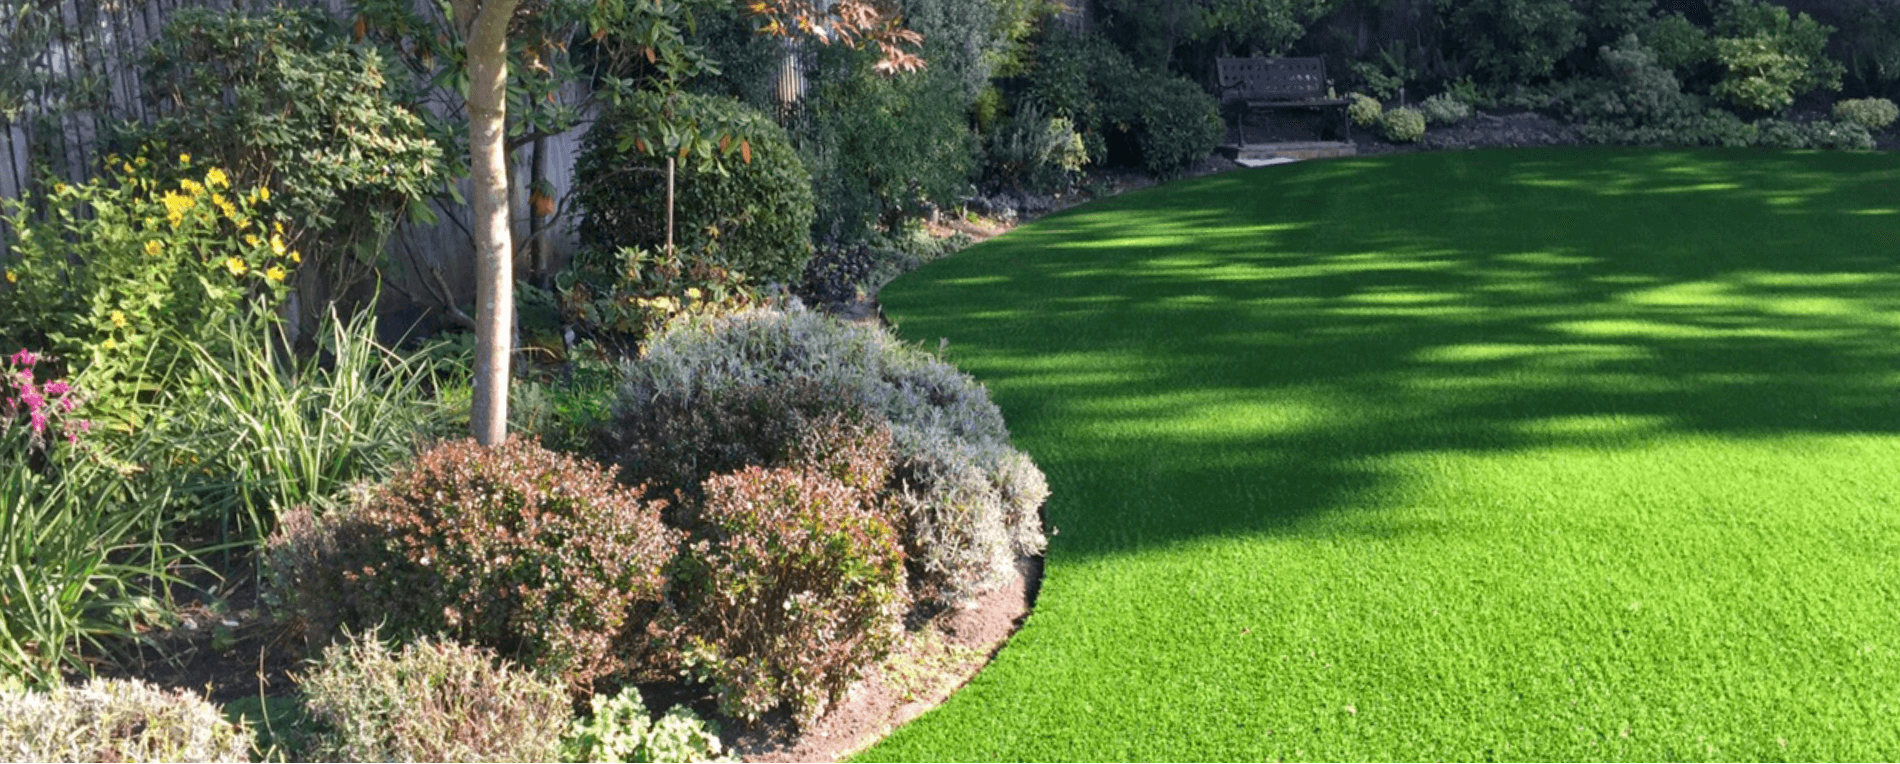 Home & Garden Artificial Grass by Trulawn